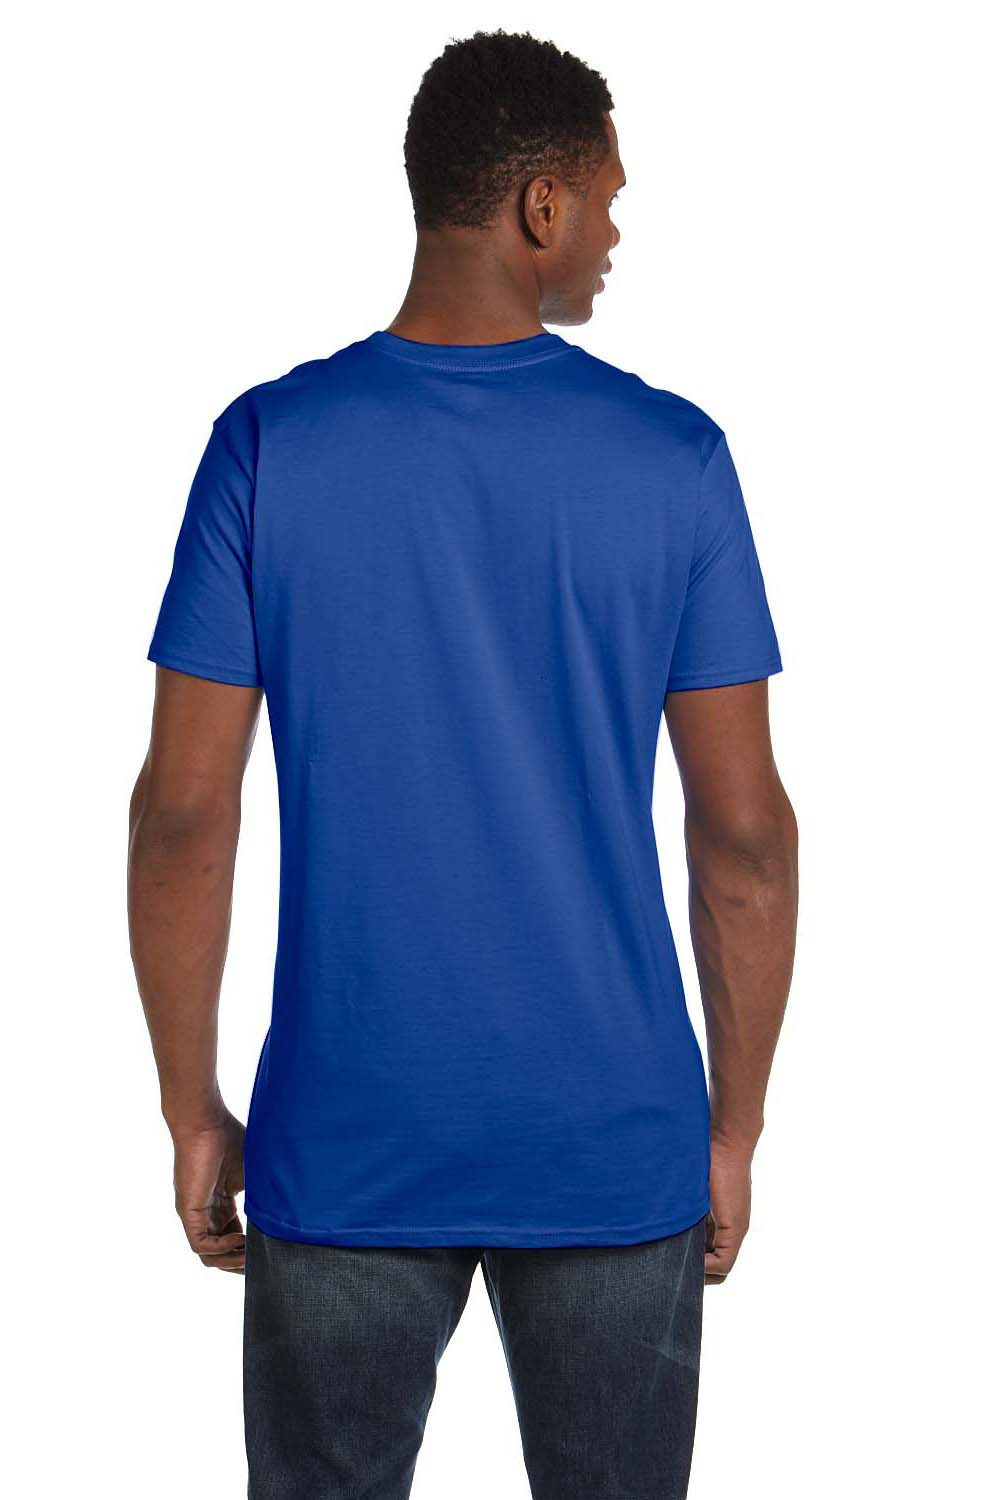 Hanes 4980 Mens Nano-T Short Sleeve Crewneck T-Shirt Royal Blue Back